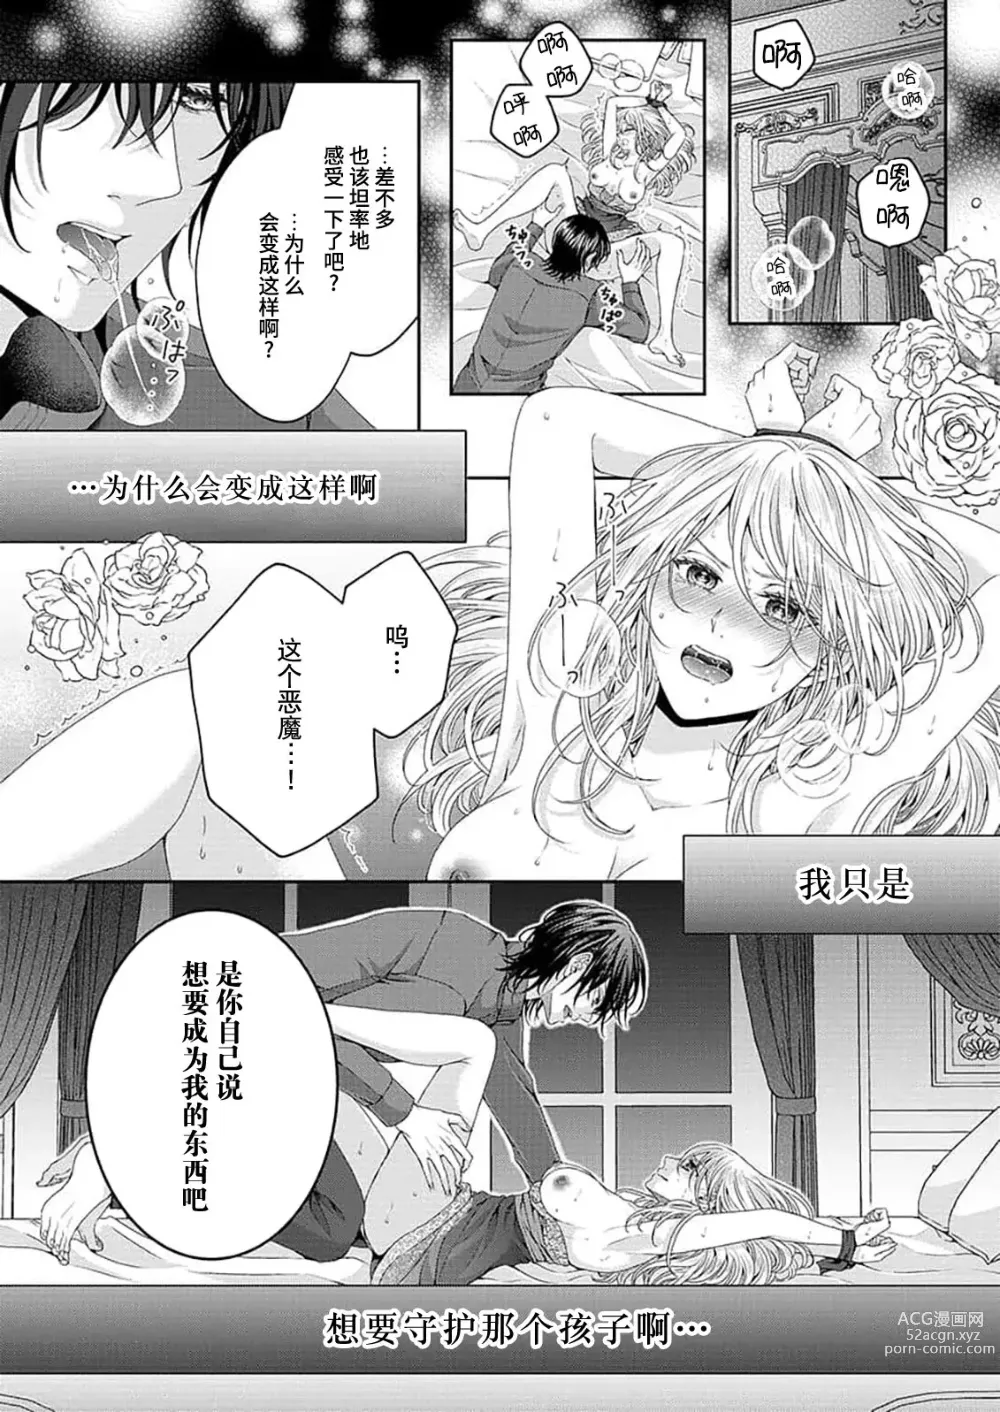 Page 1 of manga 然后你会自投罗网~冷酷王子甜蜜狡猾的陷阱